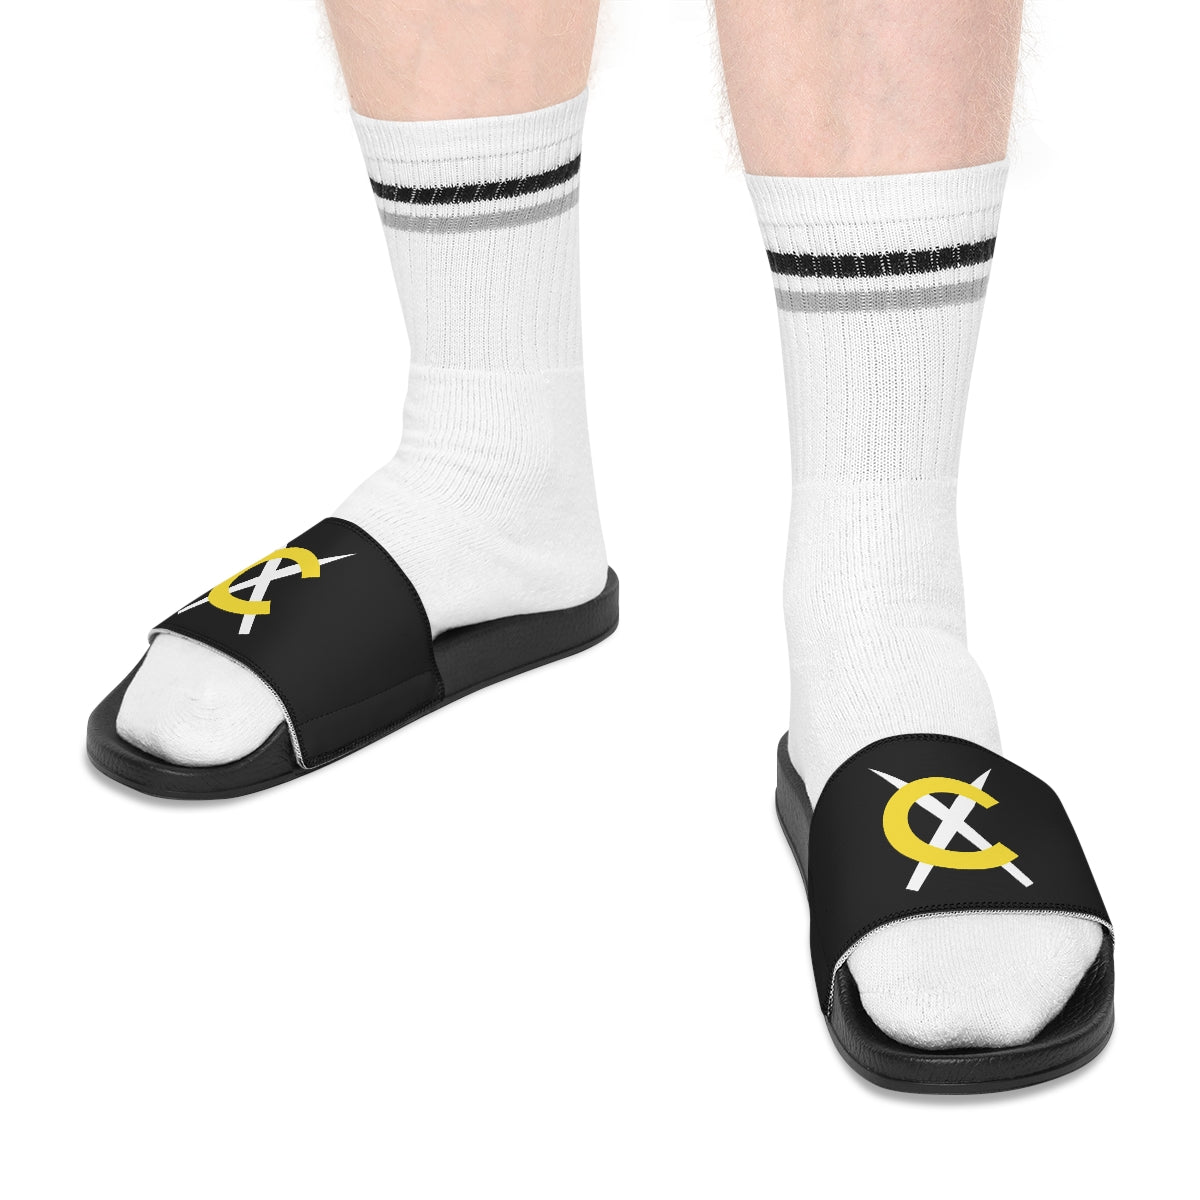 Chow Logo Men's Slide Sandals